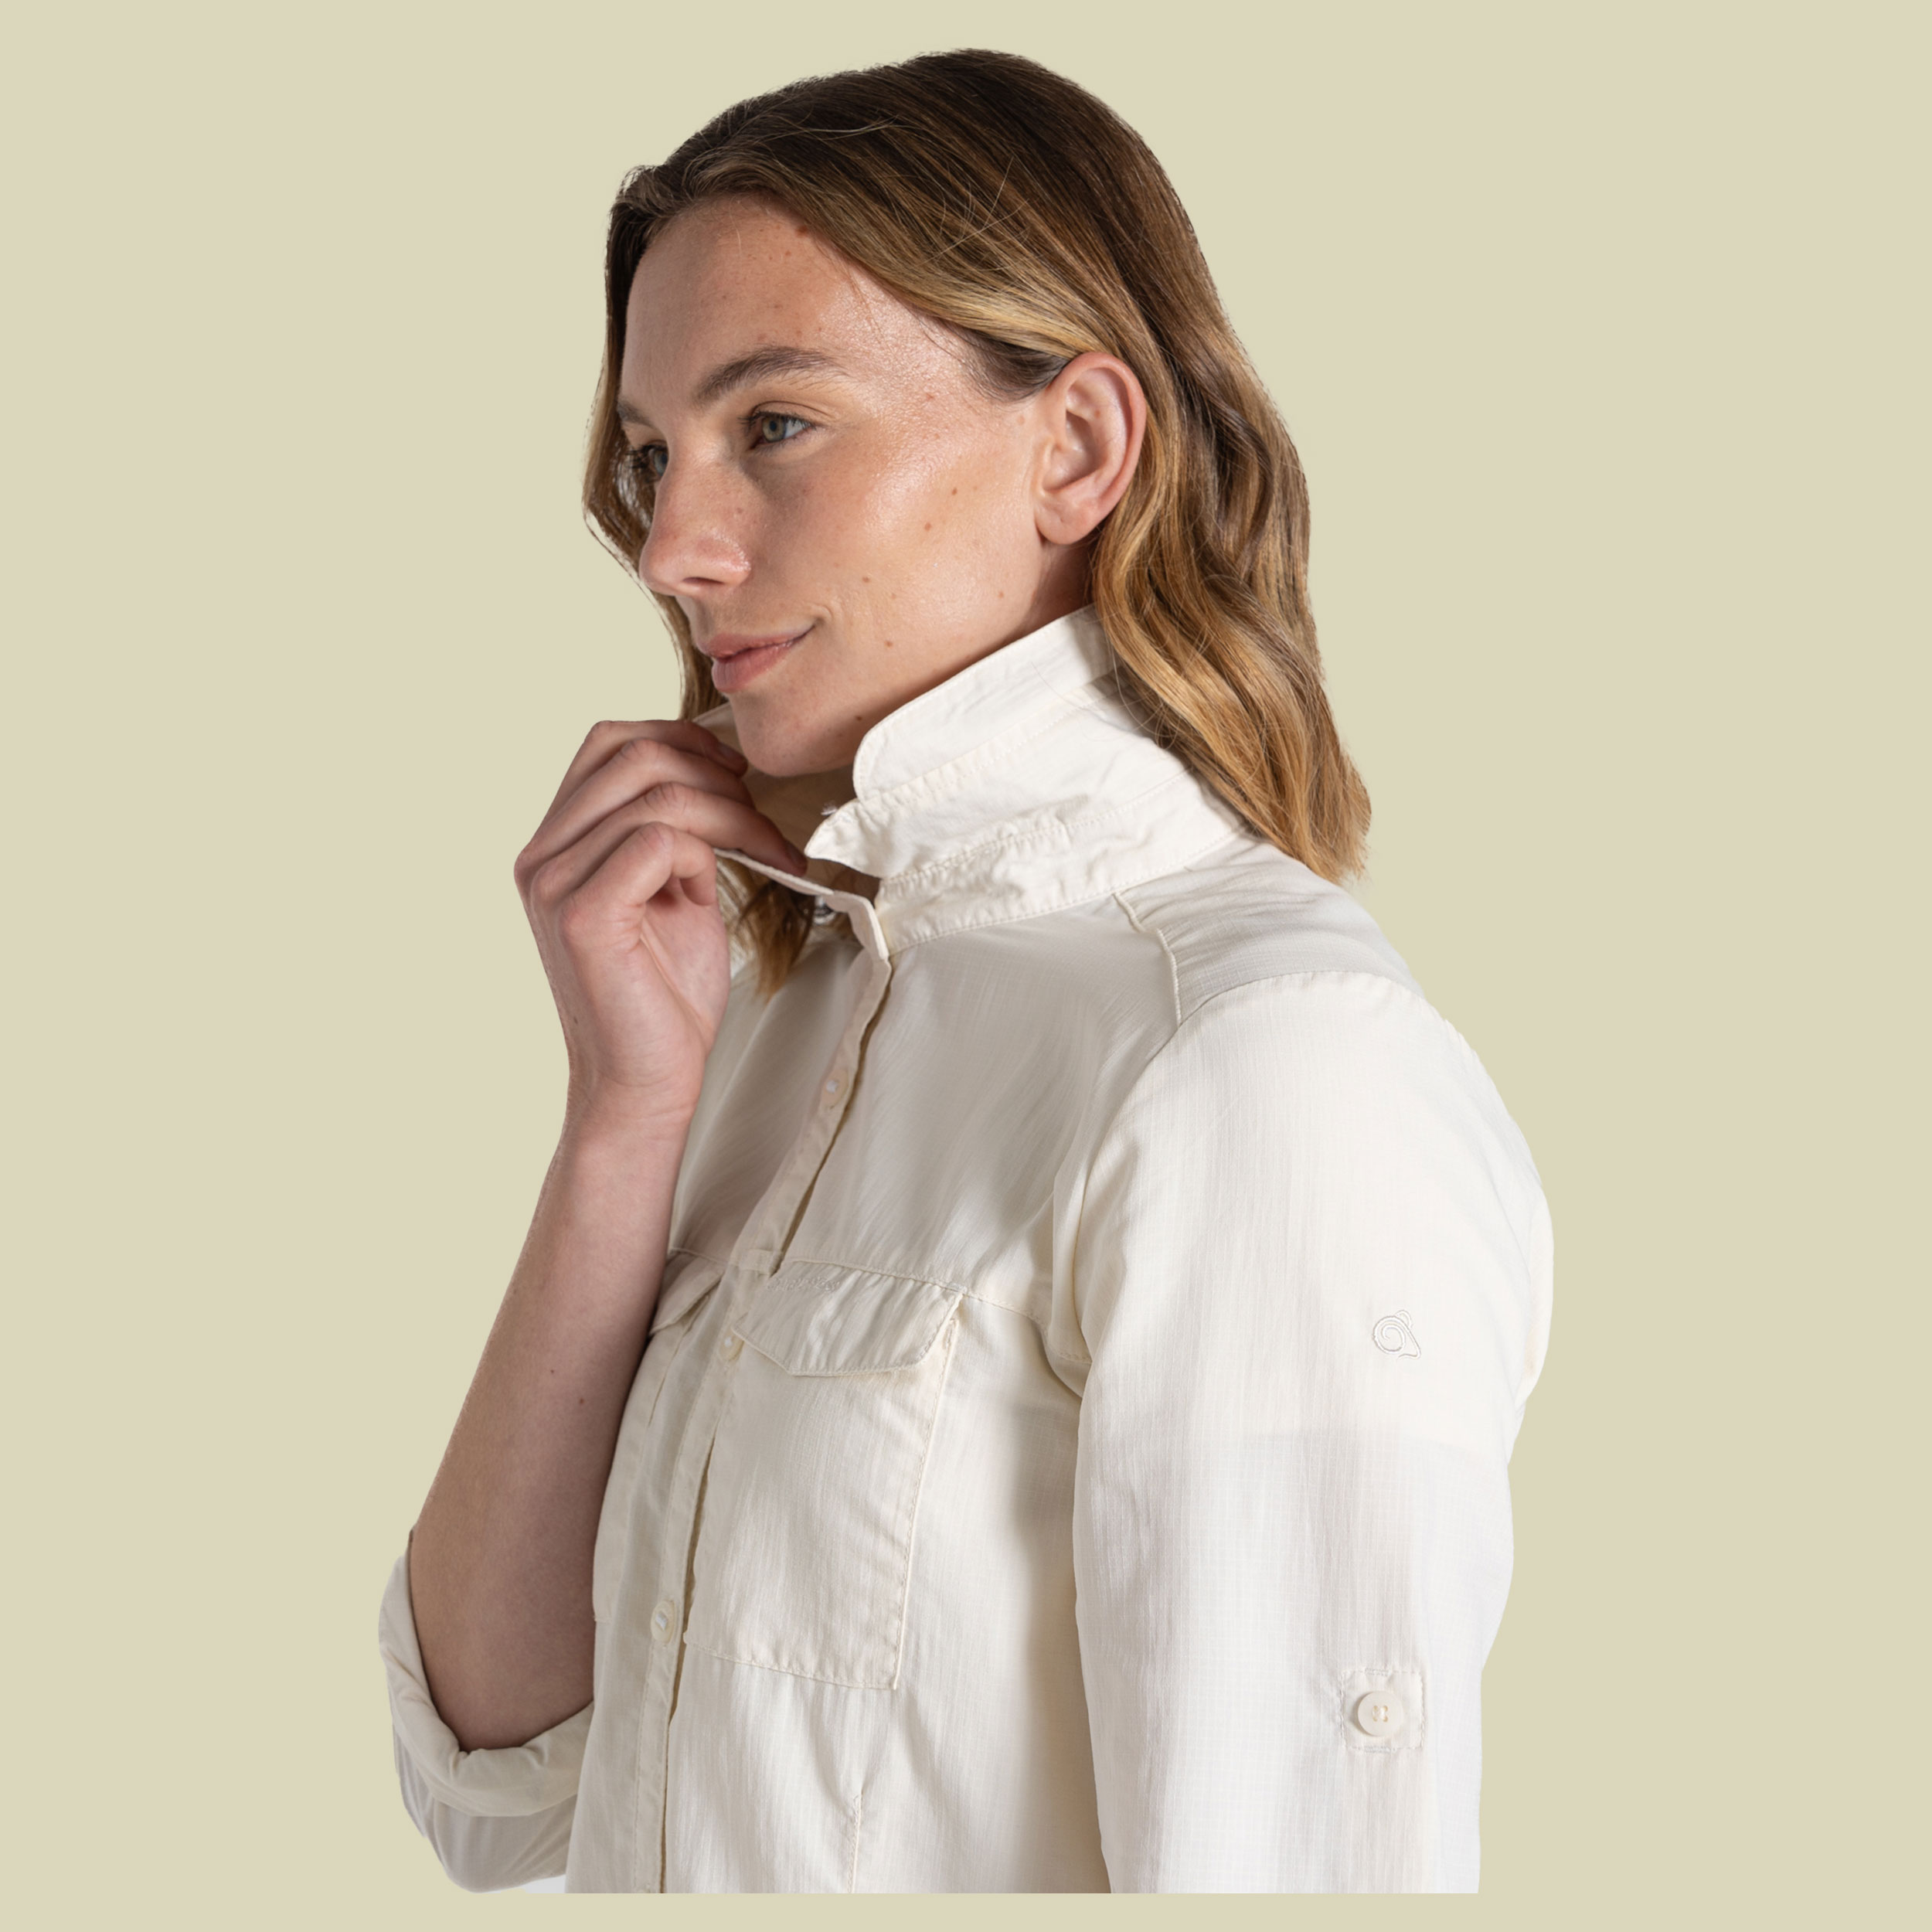 NosiLife Adventure Long Sleeved Shirt III Women 42 beige -sea salt (UK 16)